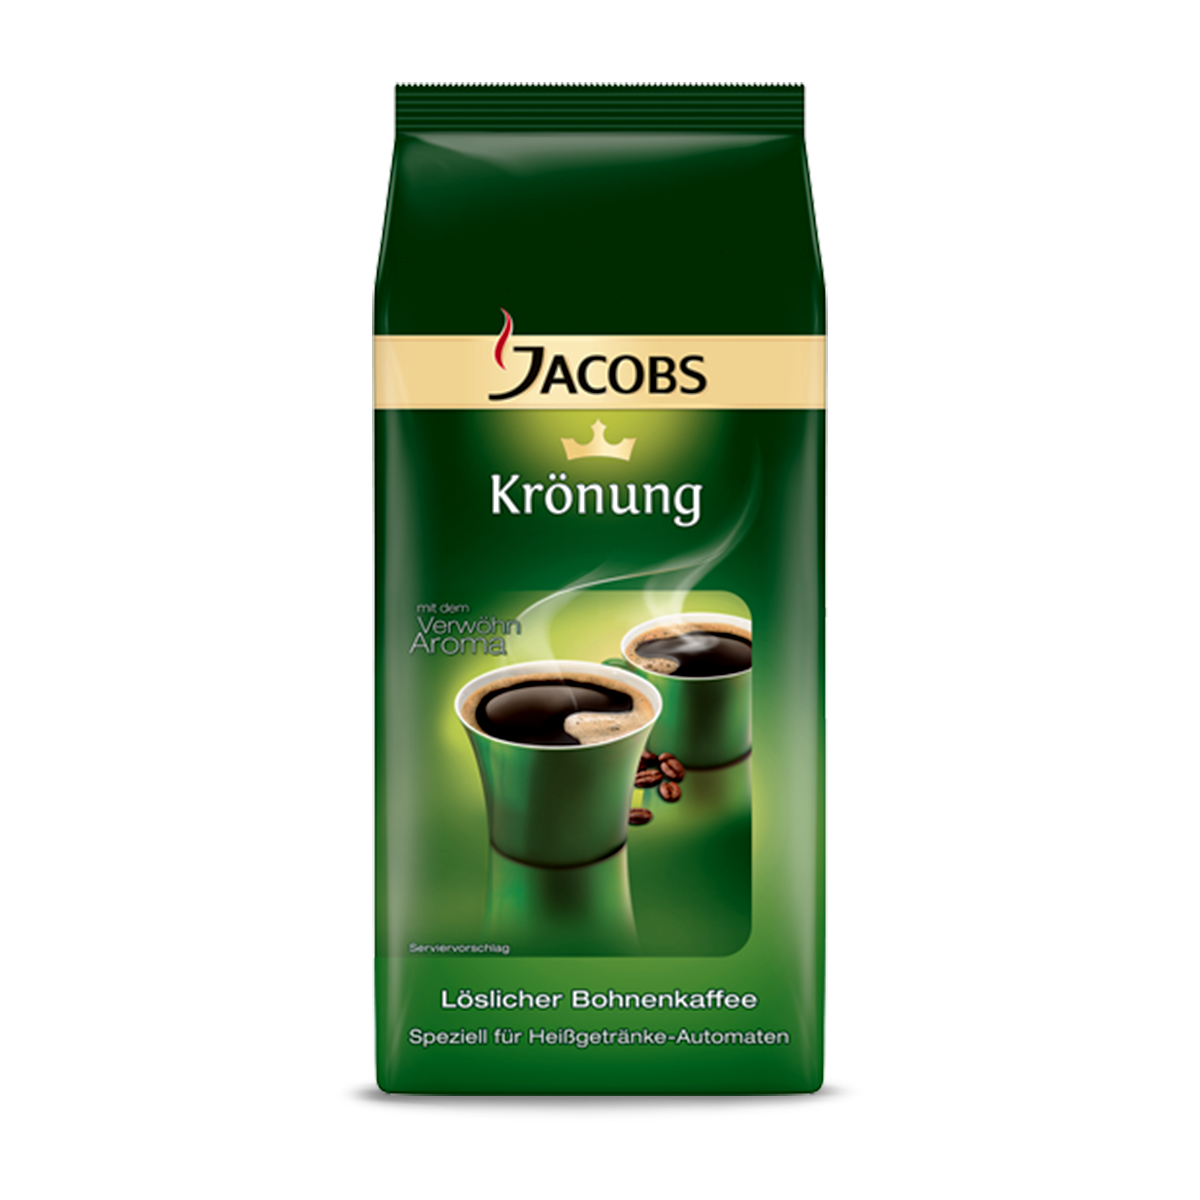 Jacobs - Krönung Instant